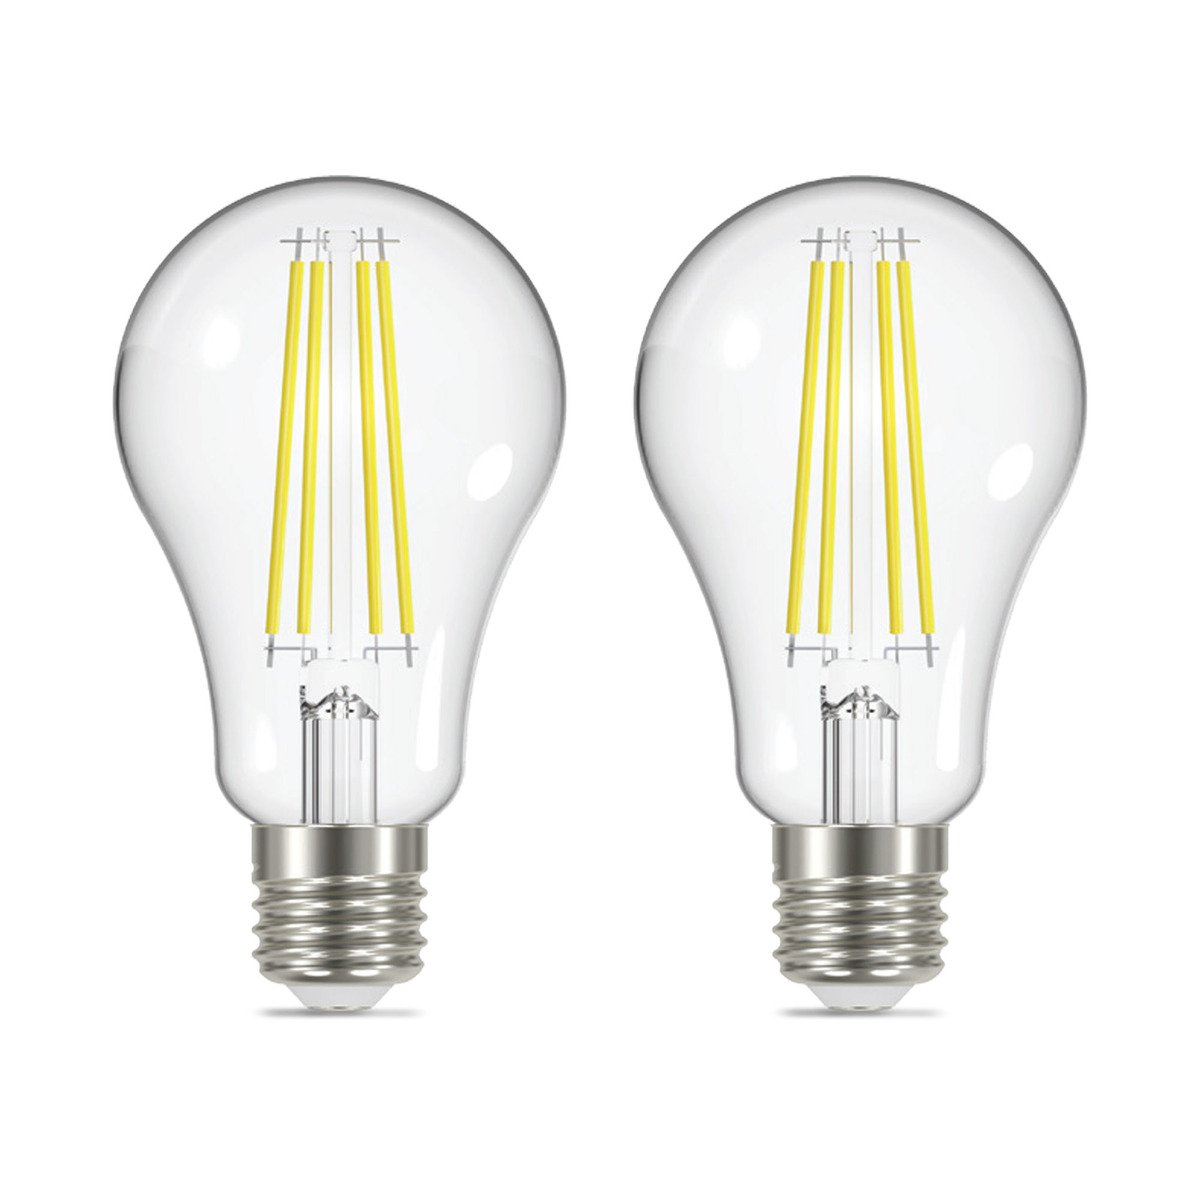 Electrolux LED Filament Bulb 2pcs 6W E27 WL